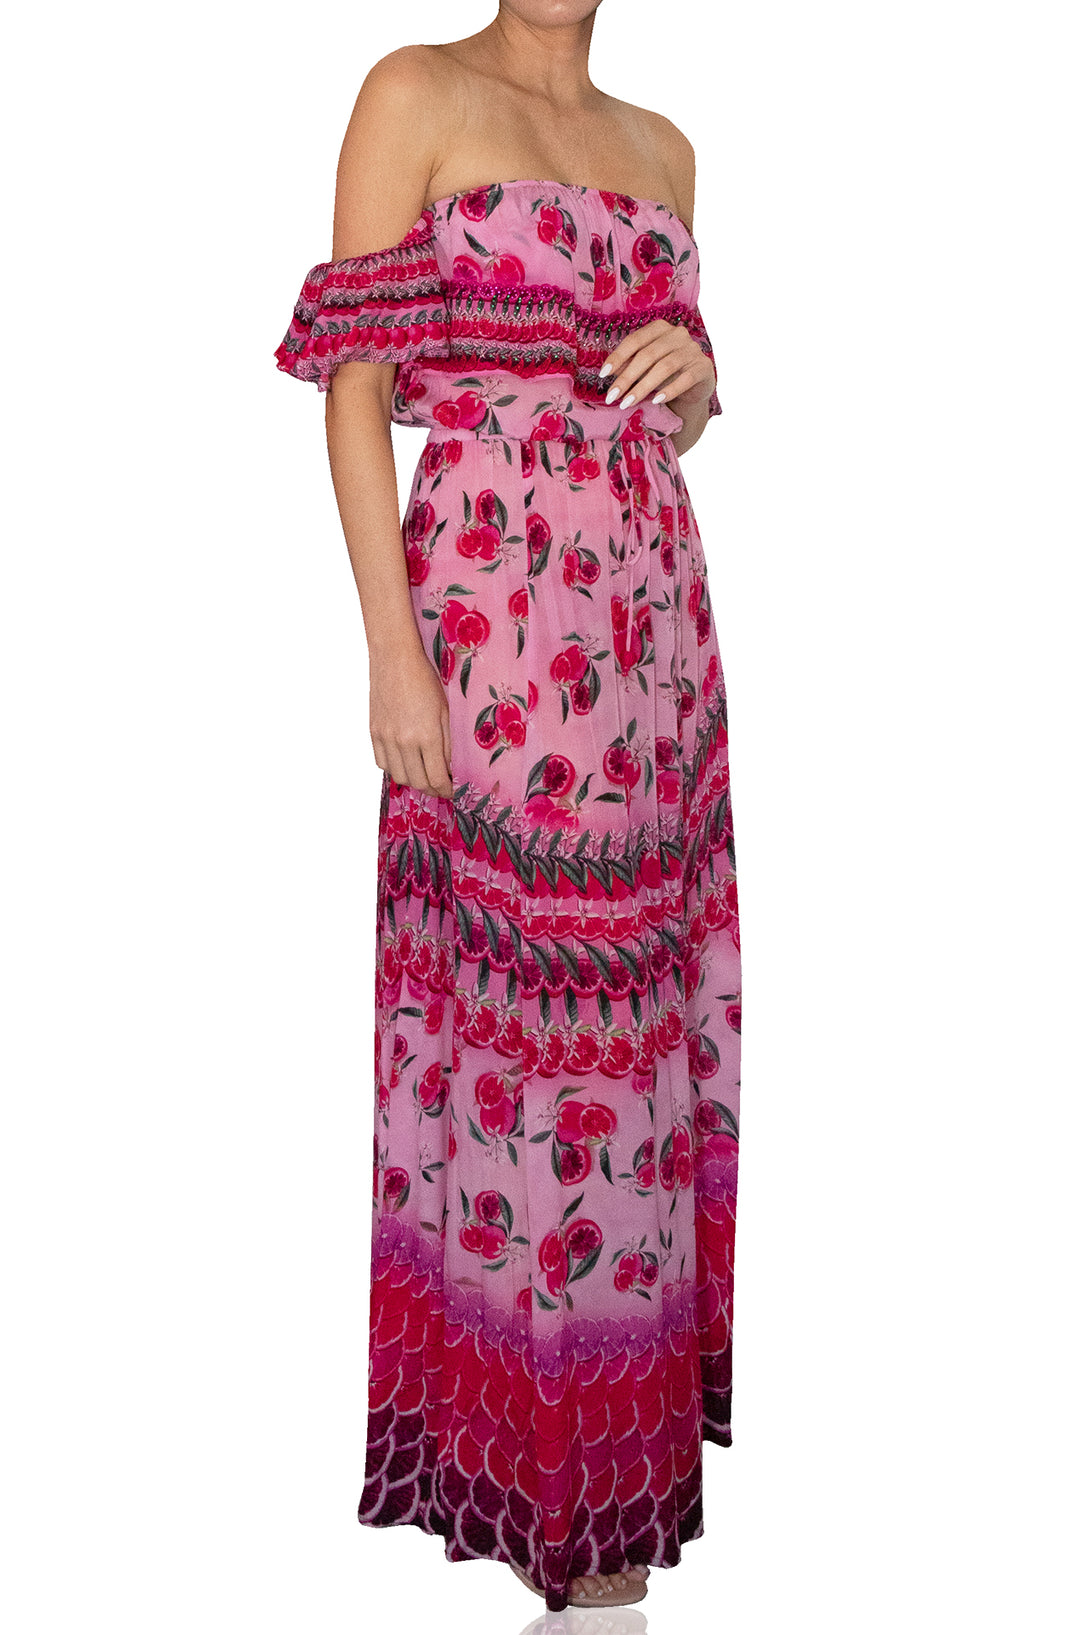  pink dress for women, off the shoulder evening dress, Shahida Parides, long maxi dress,